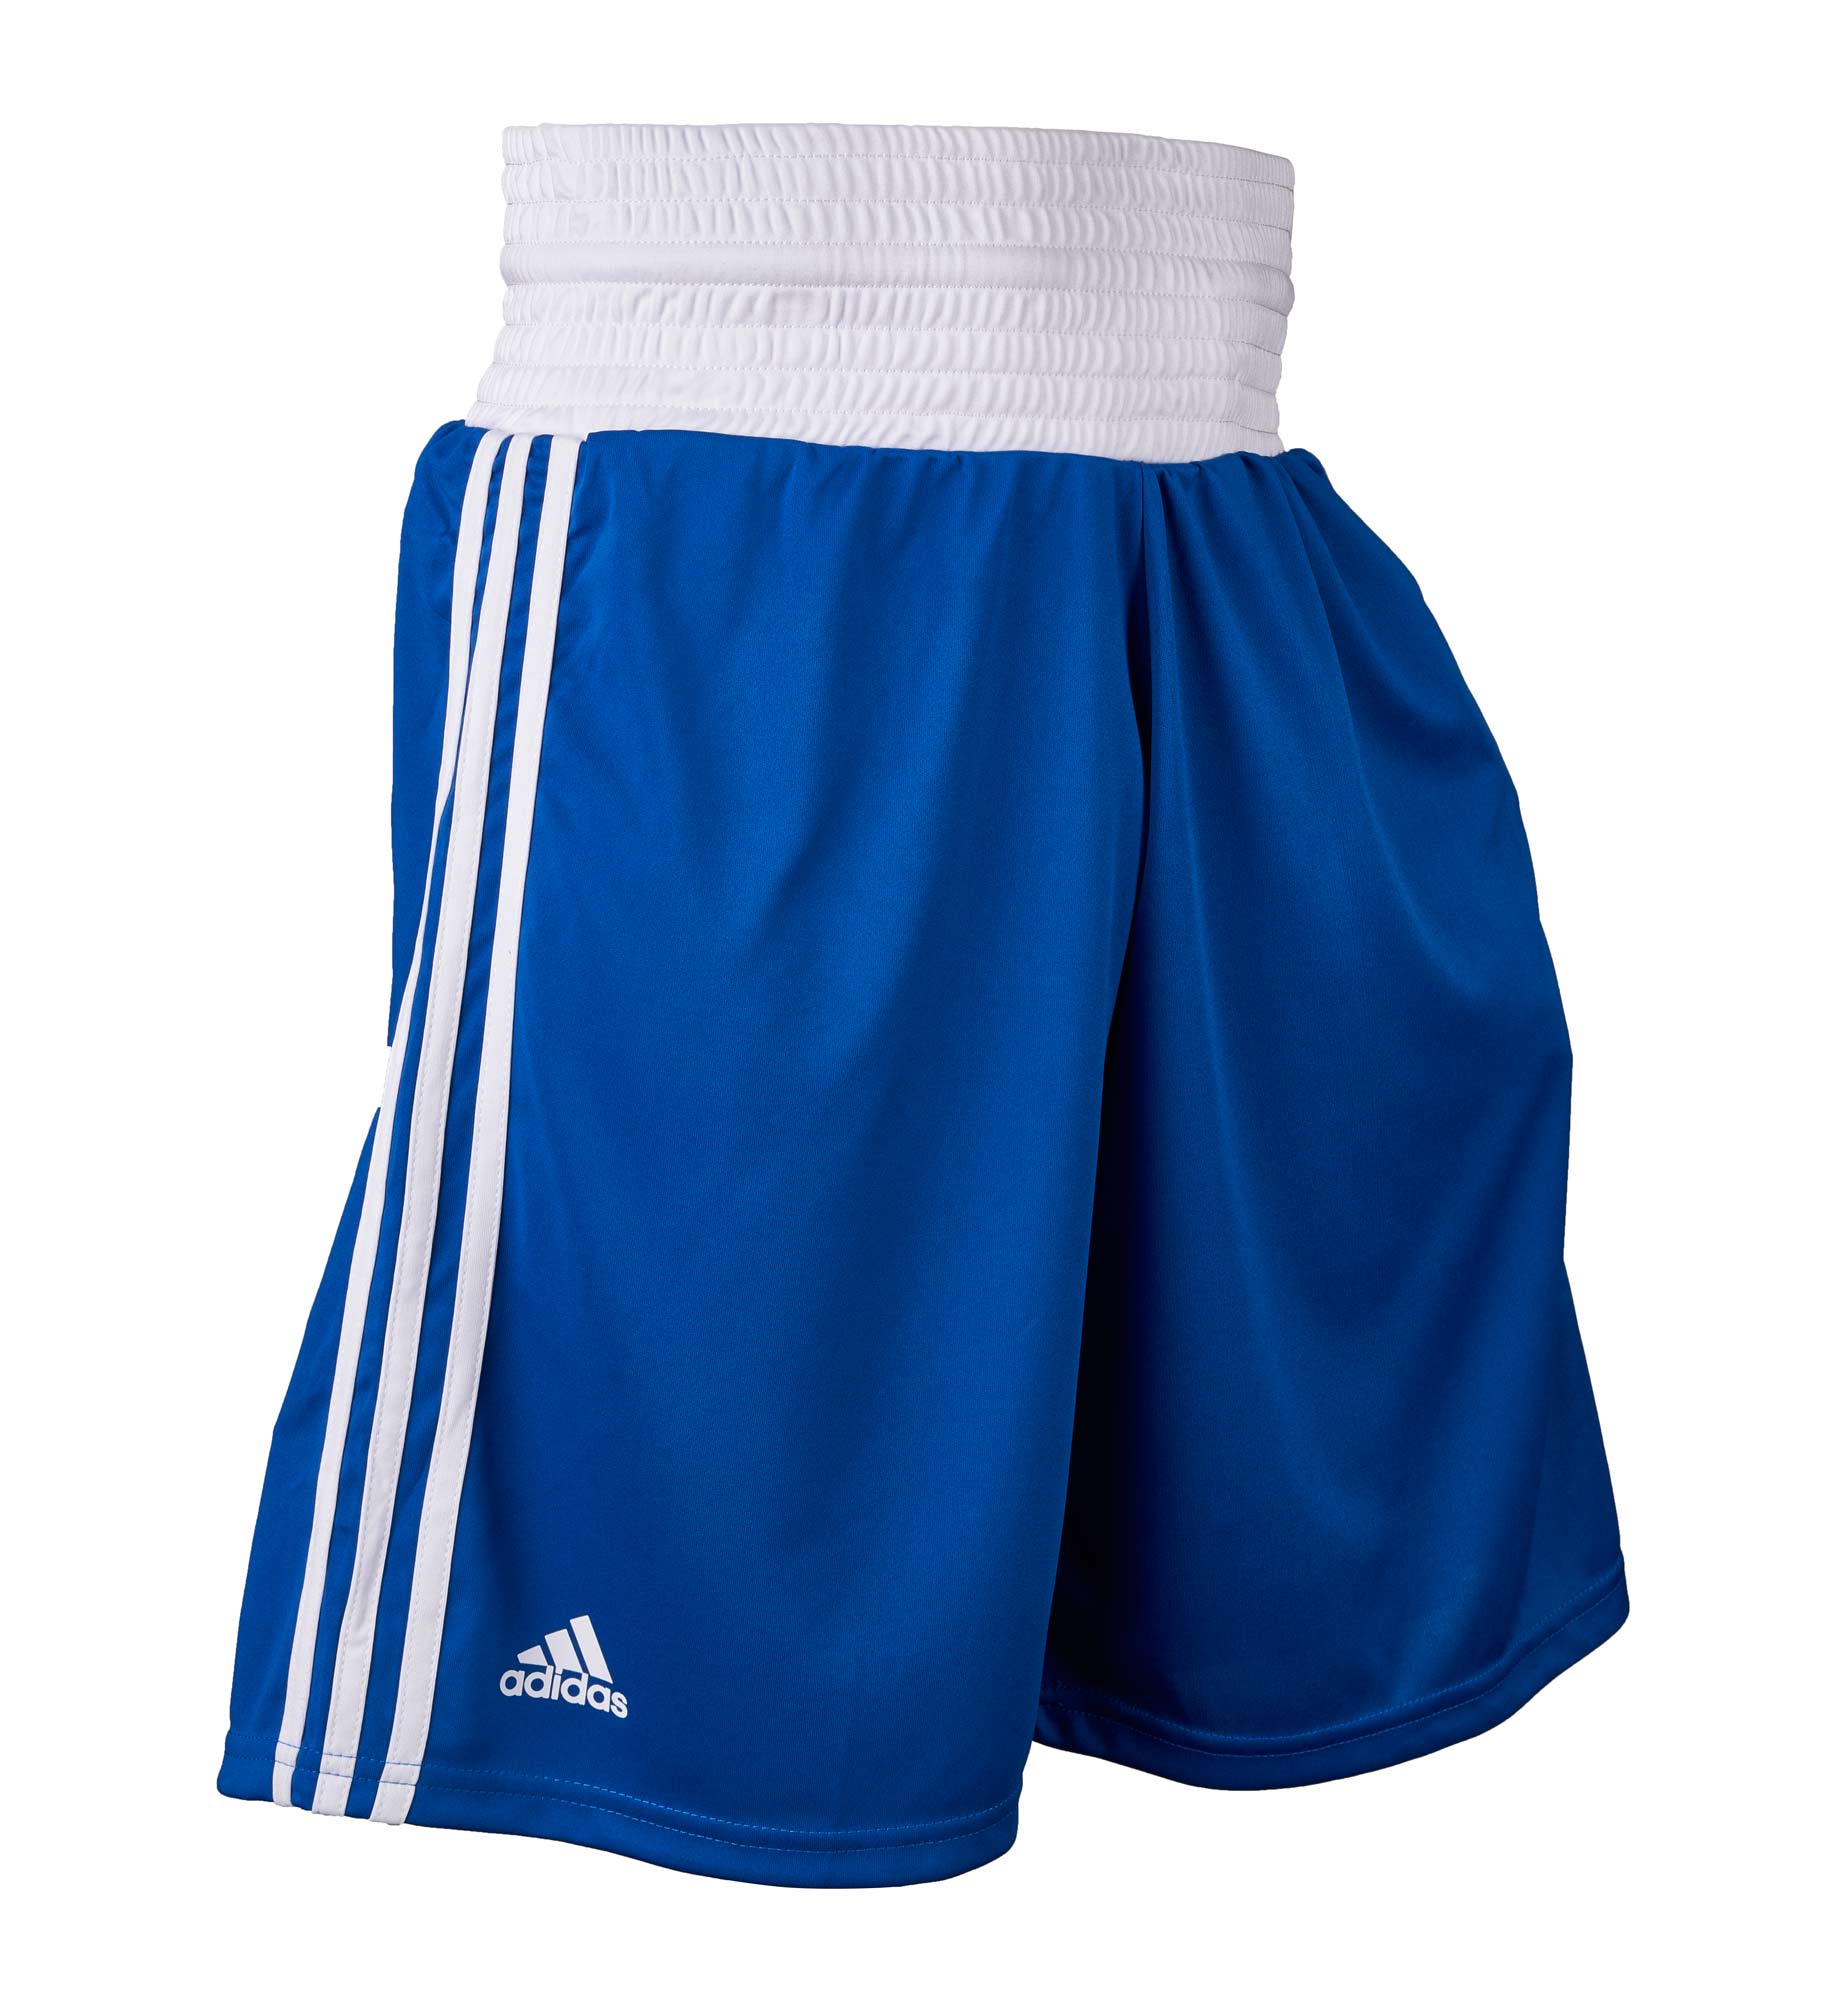 adidas boxing shorts ADIBTS02 blue